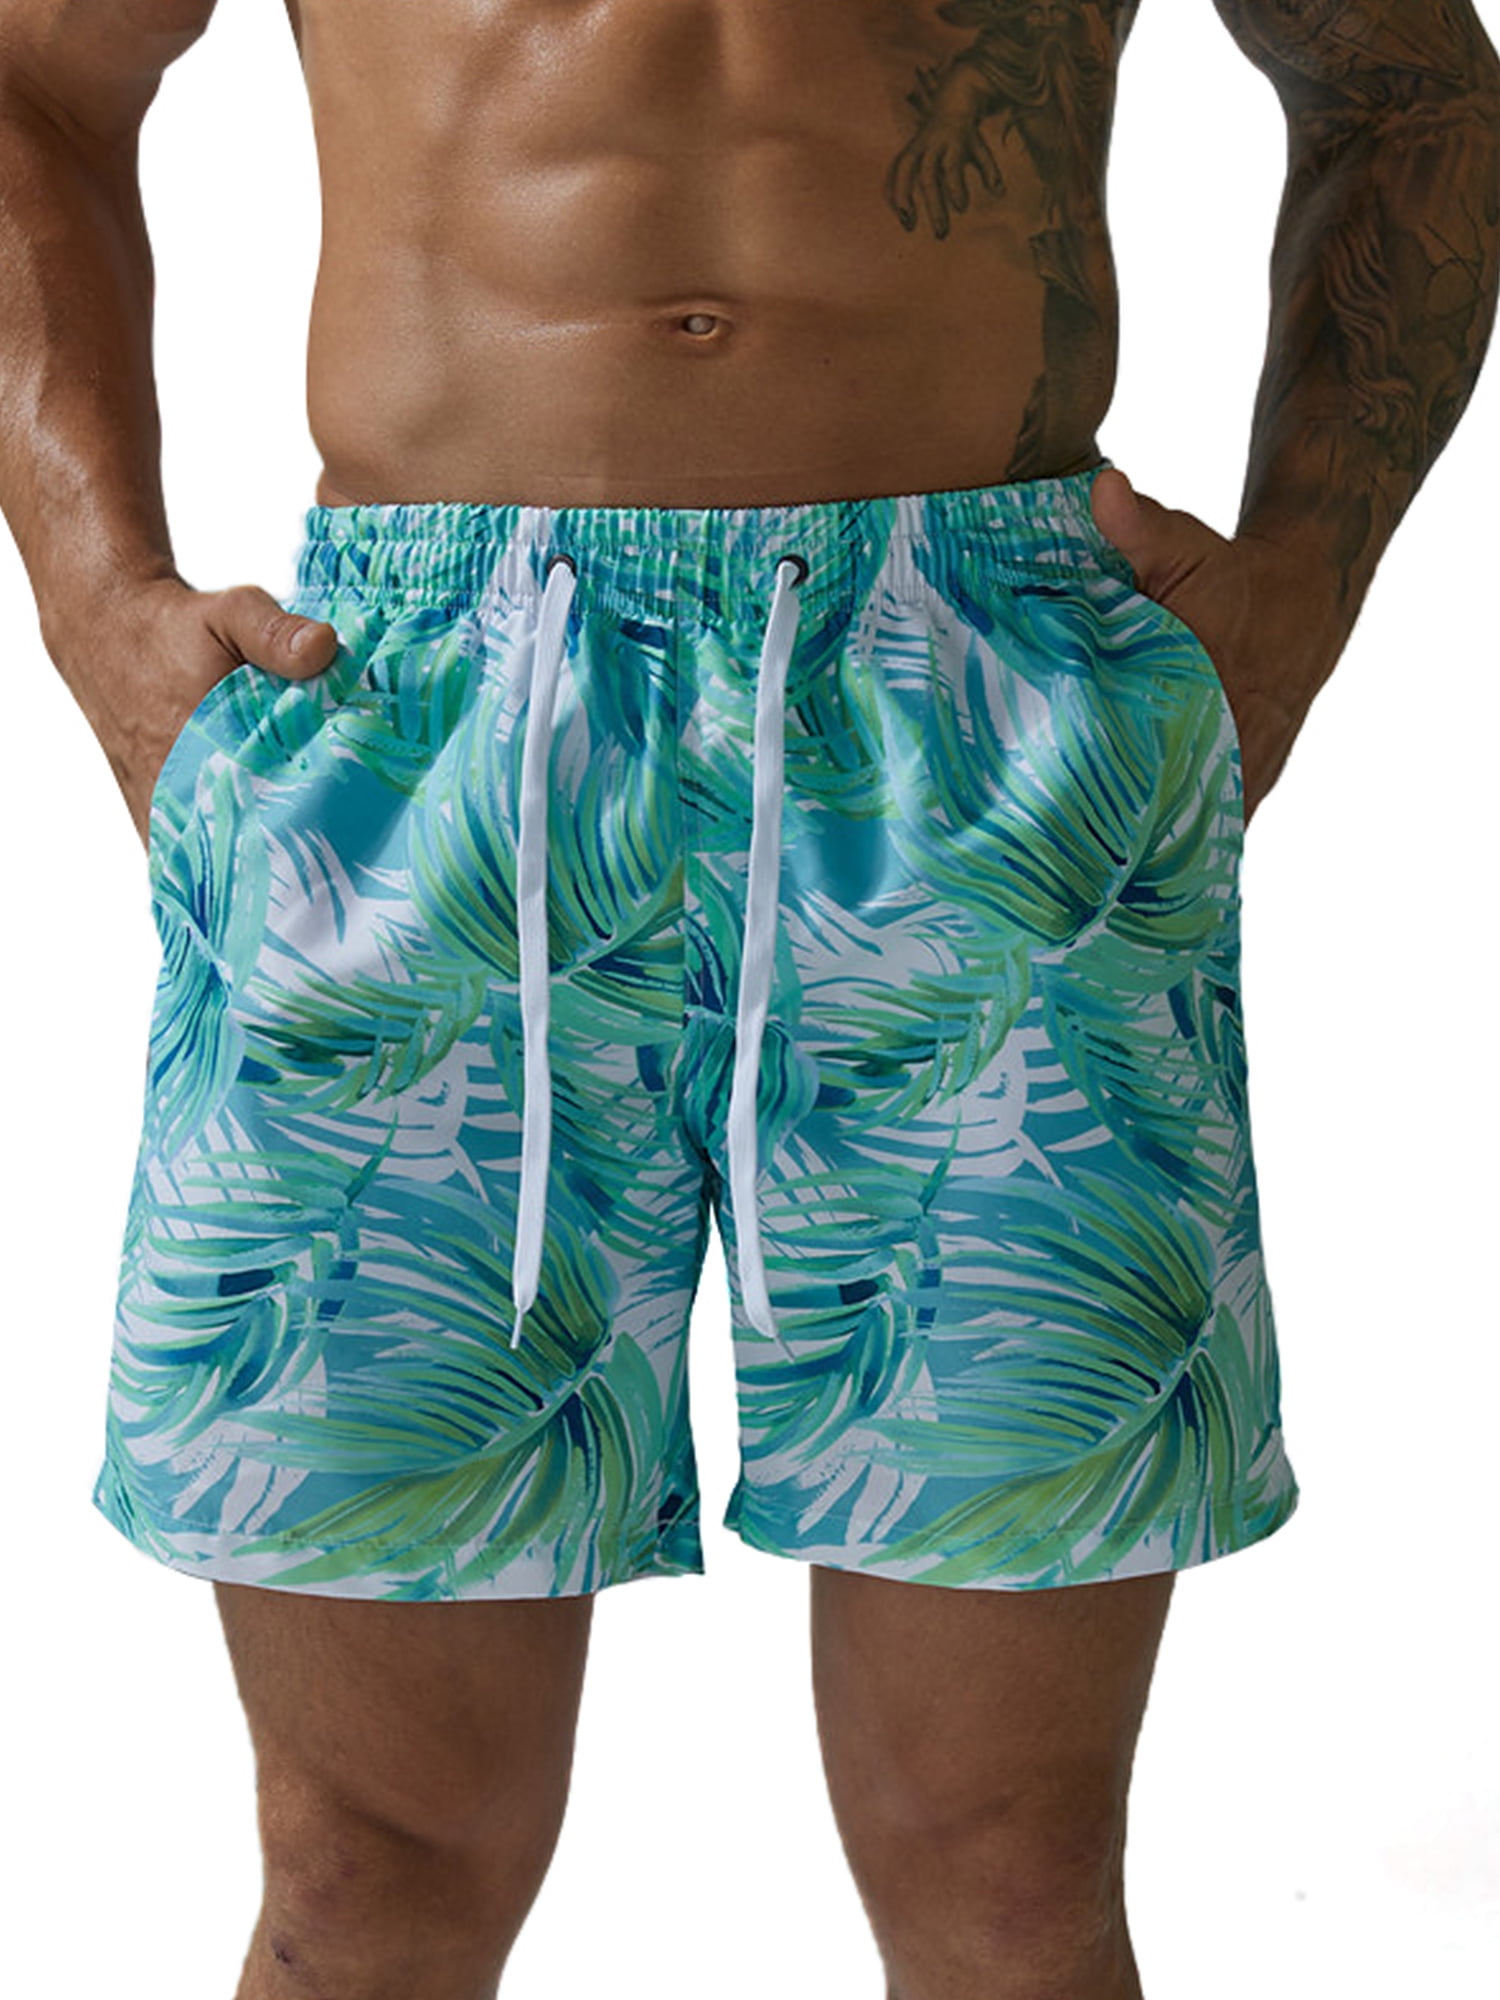 Men Swimwear Swim Trunks Bananas Pattern GDR Quick Dry Casual Beach Summer Outfit Pants 